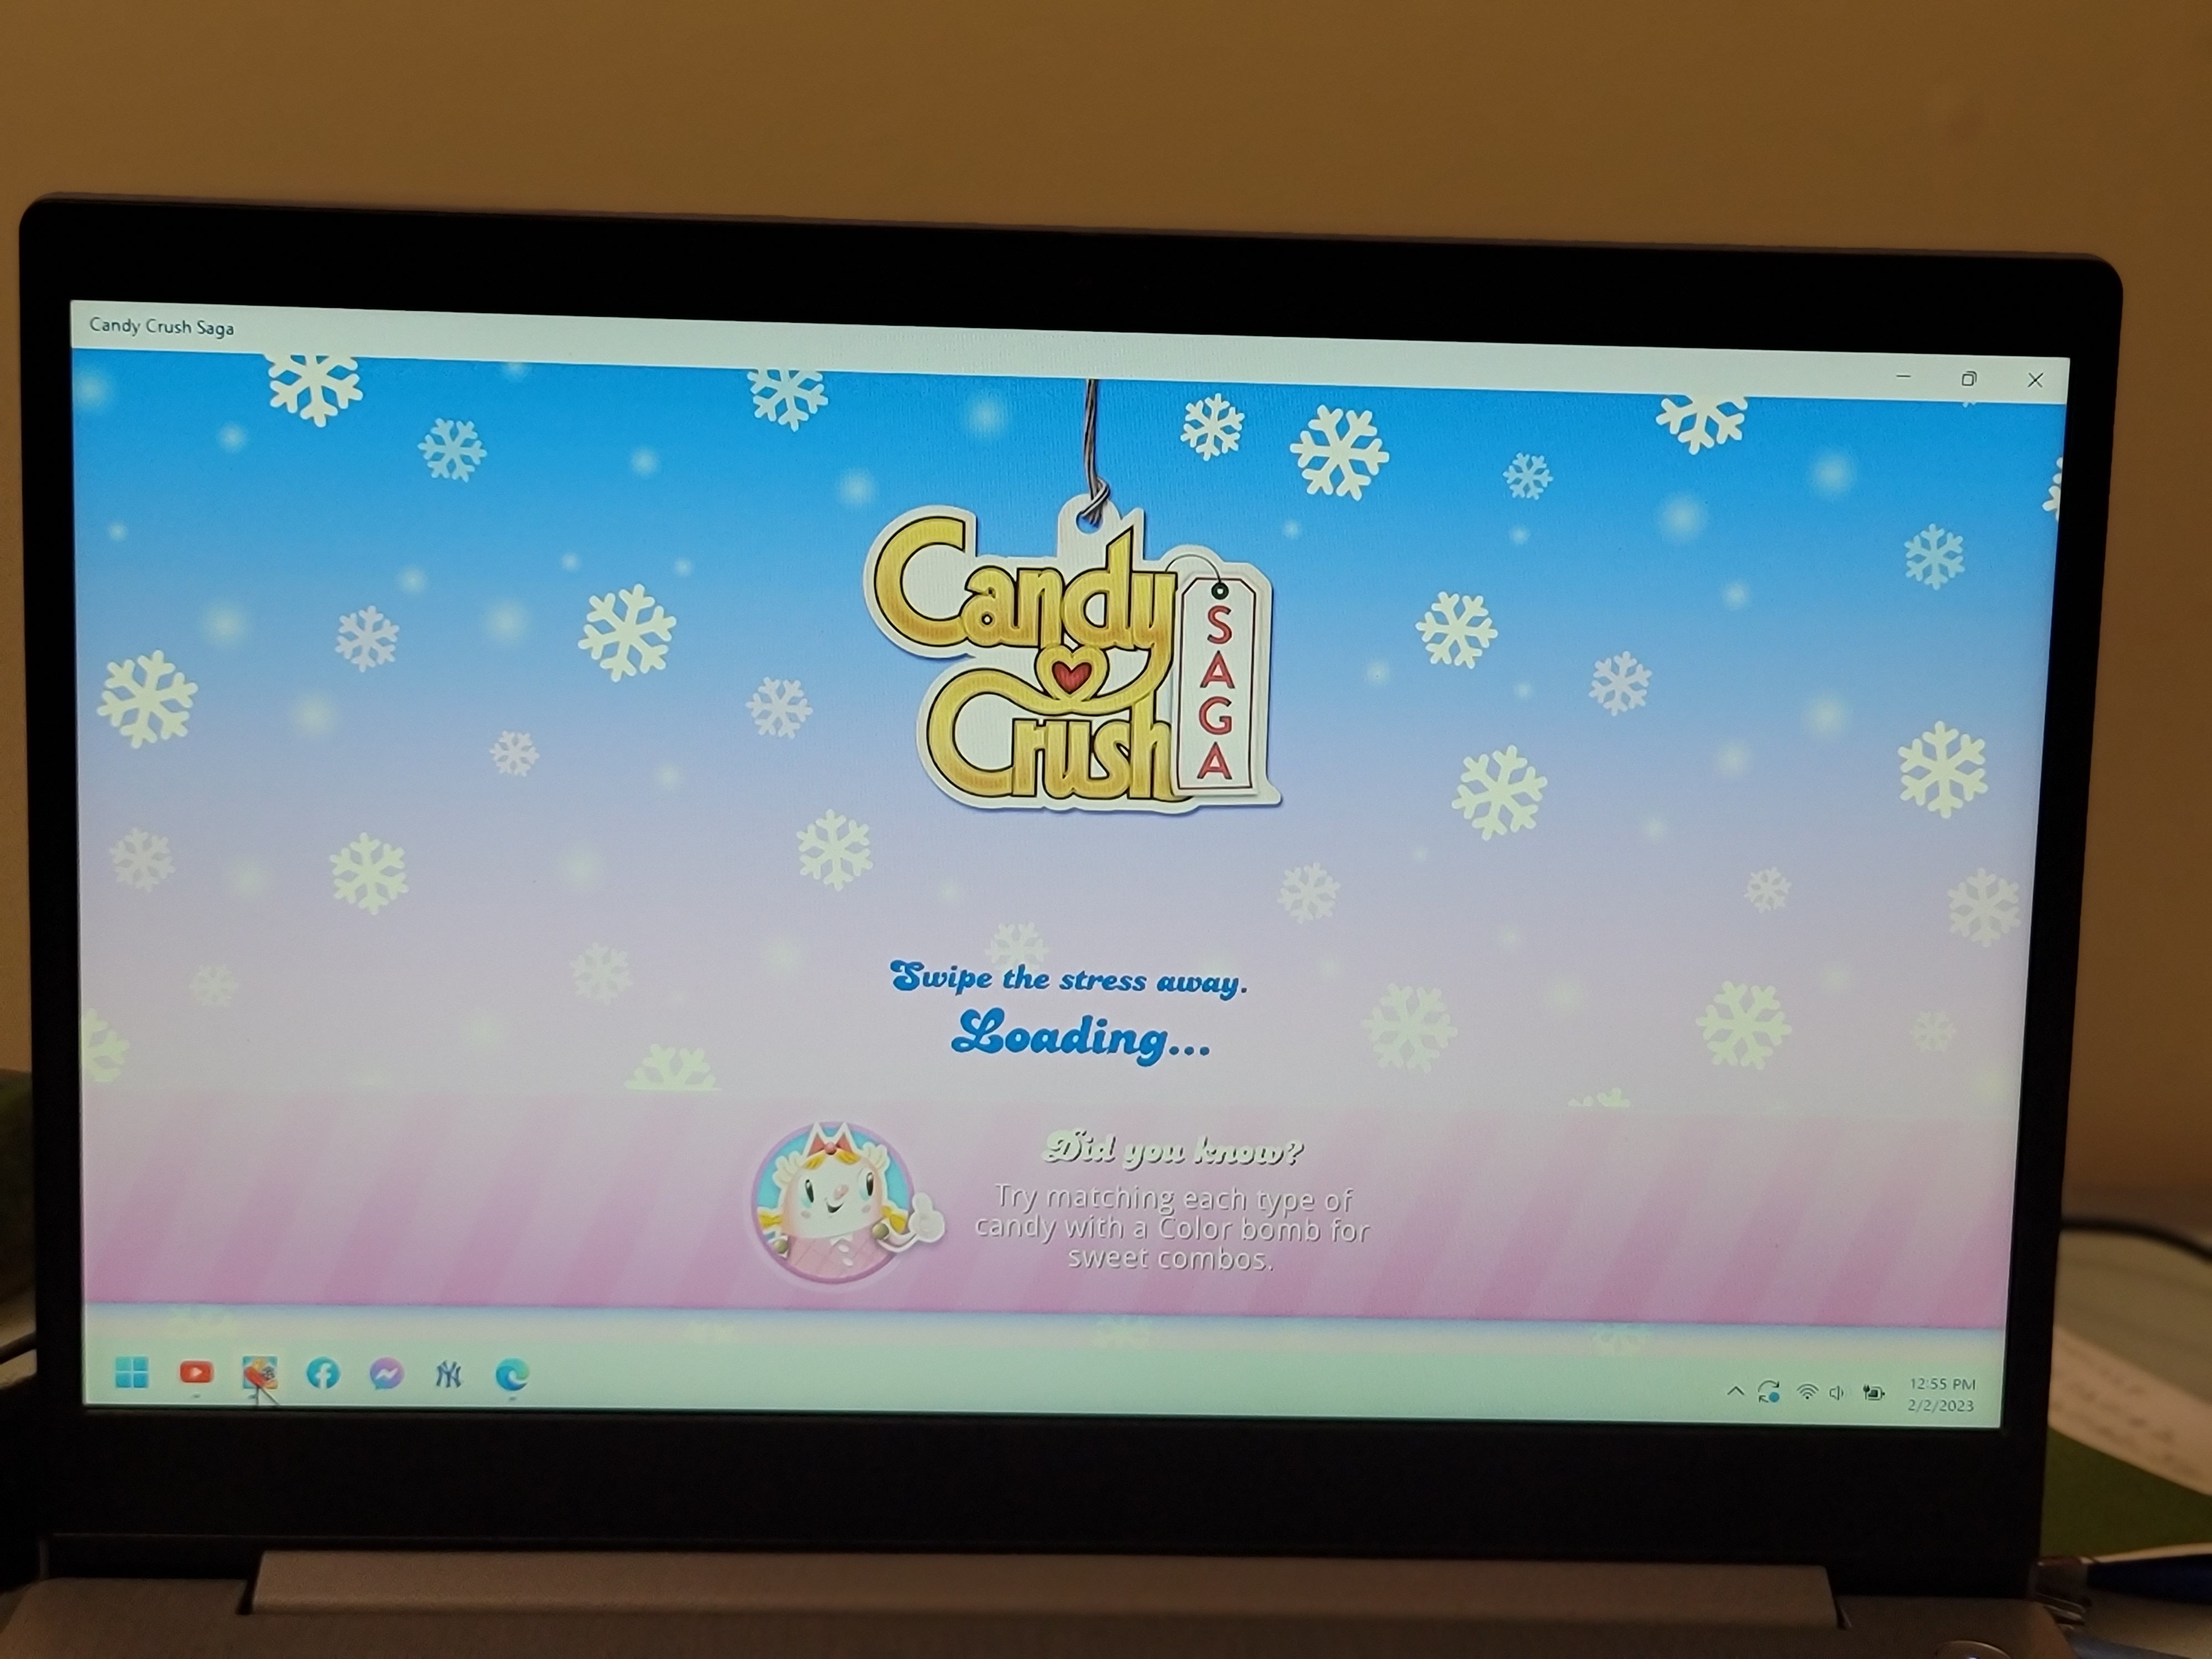 Launching today: Candy Crush Saga for Windows Phone